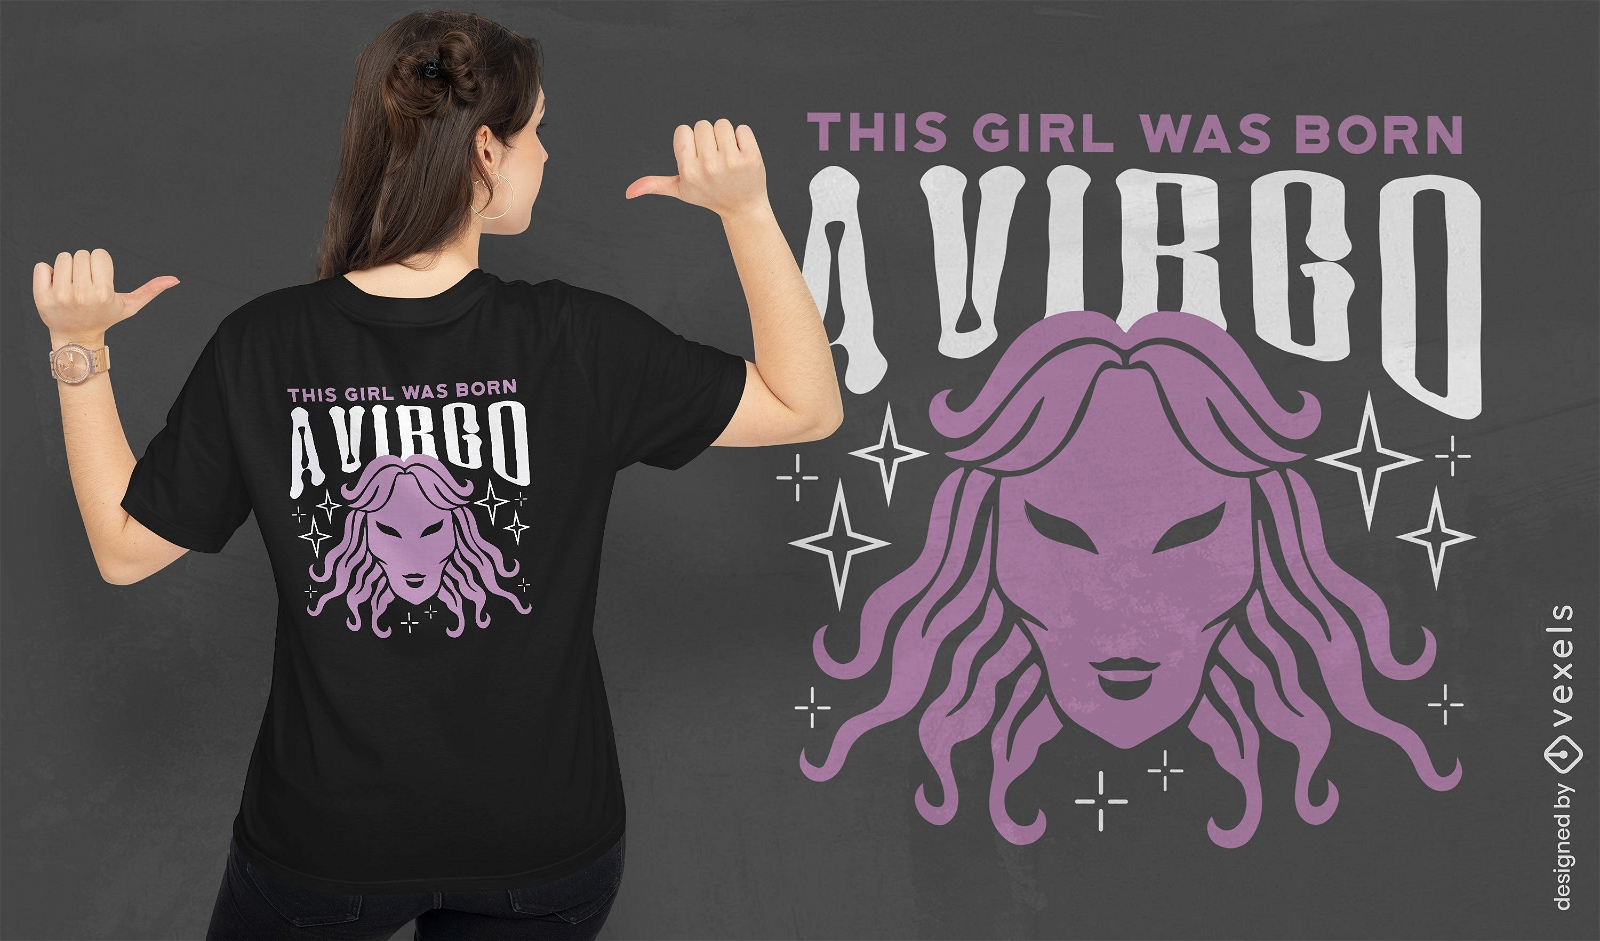 Born virgo girl t-shirt design